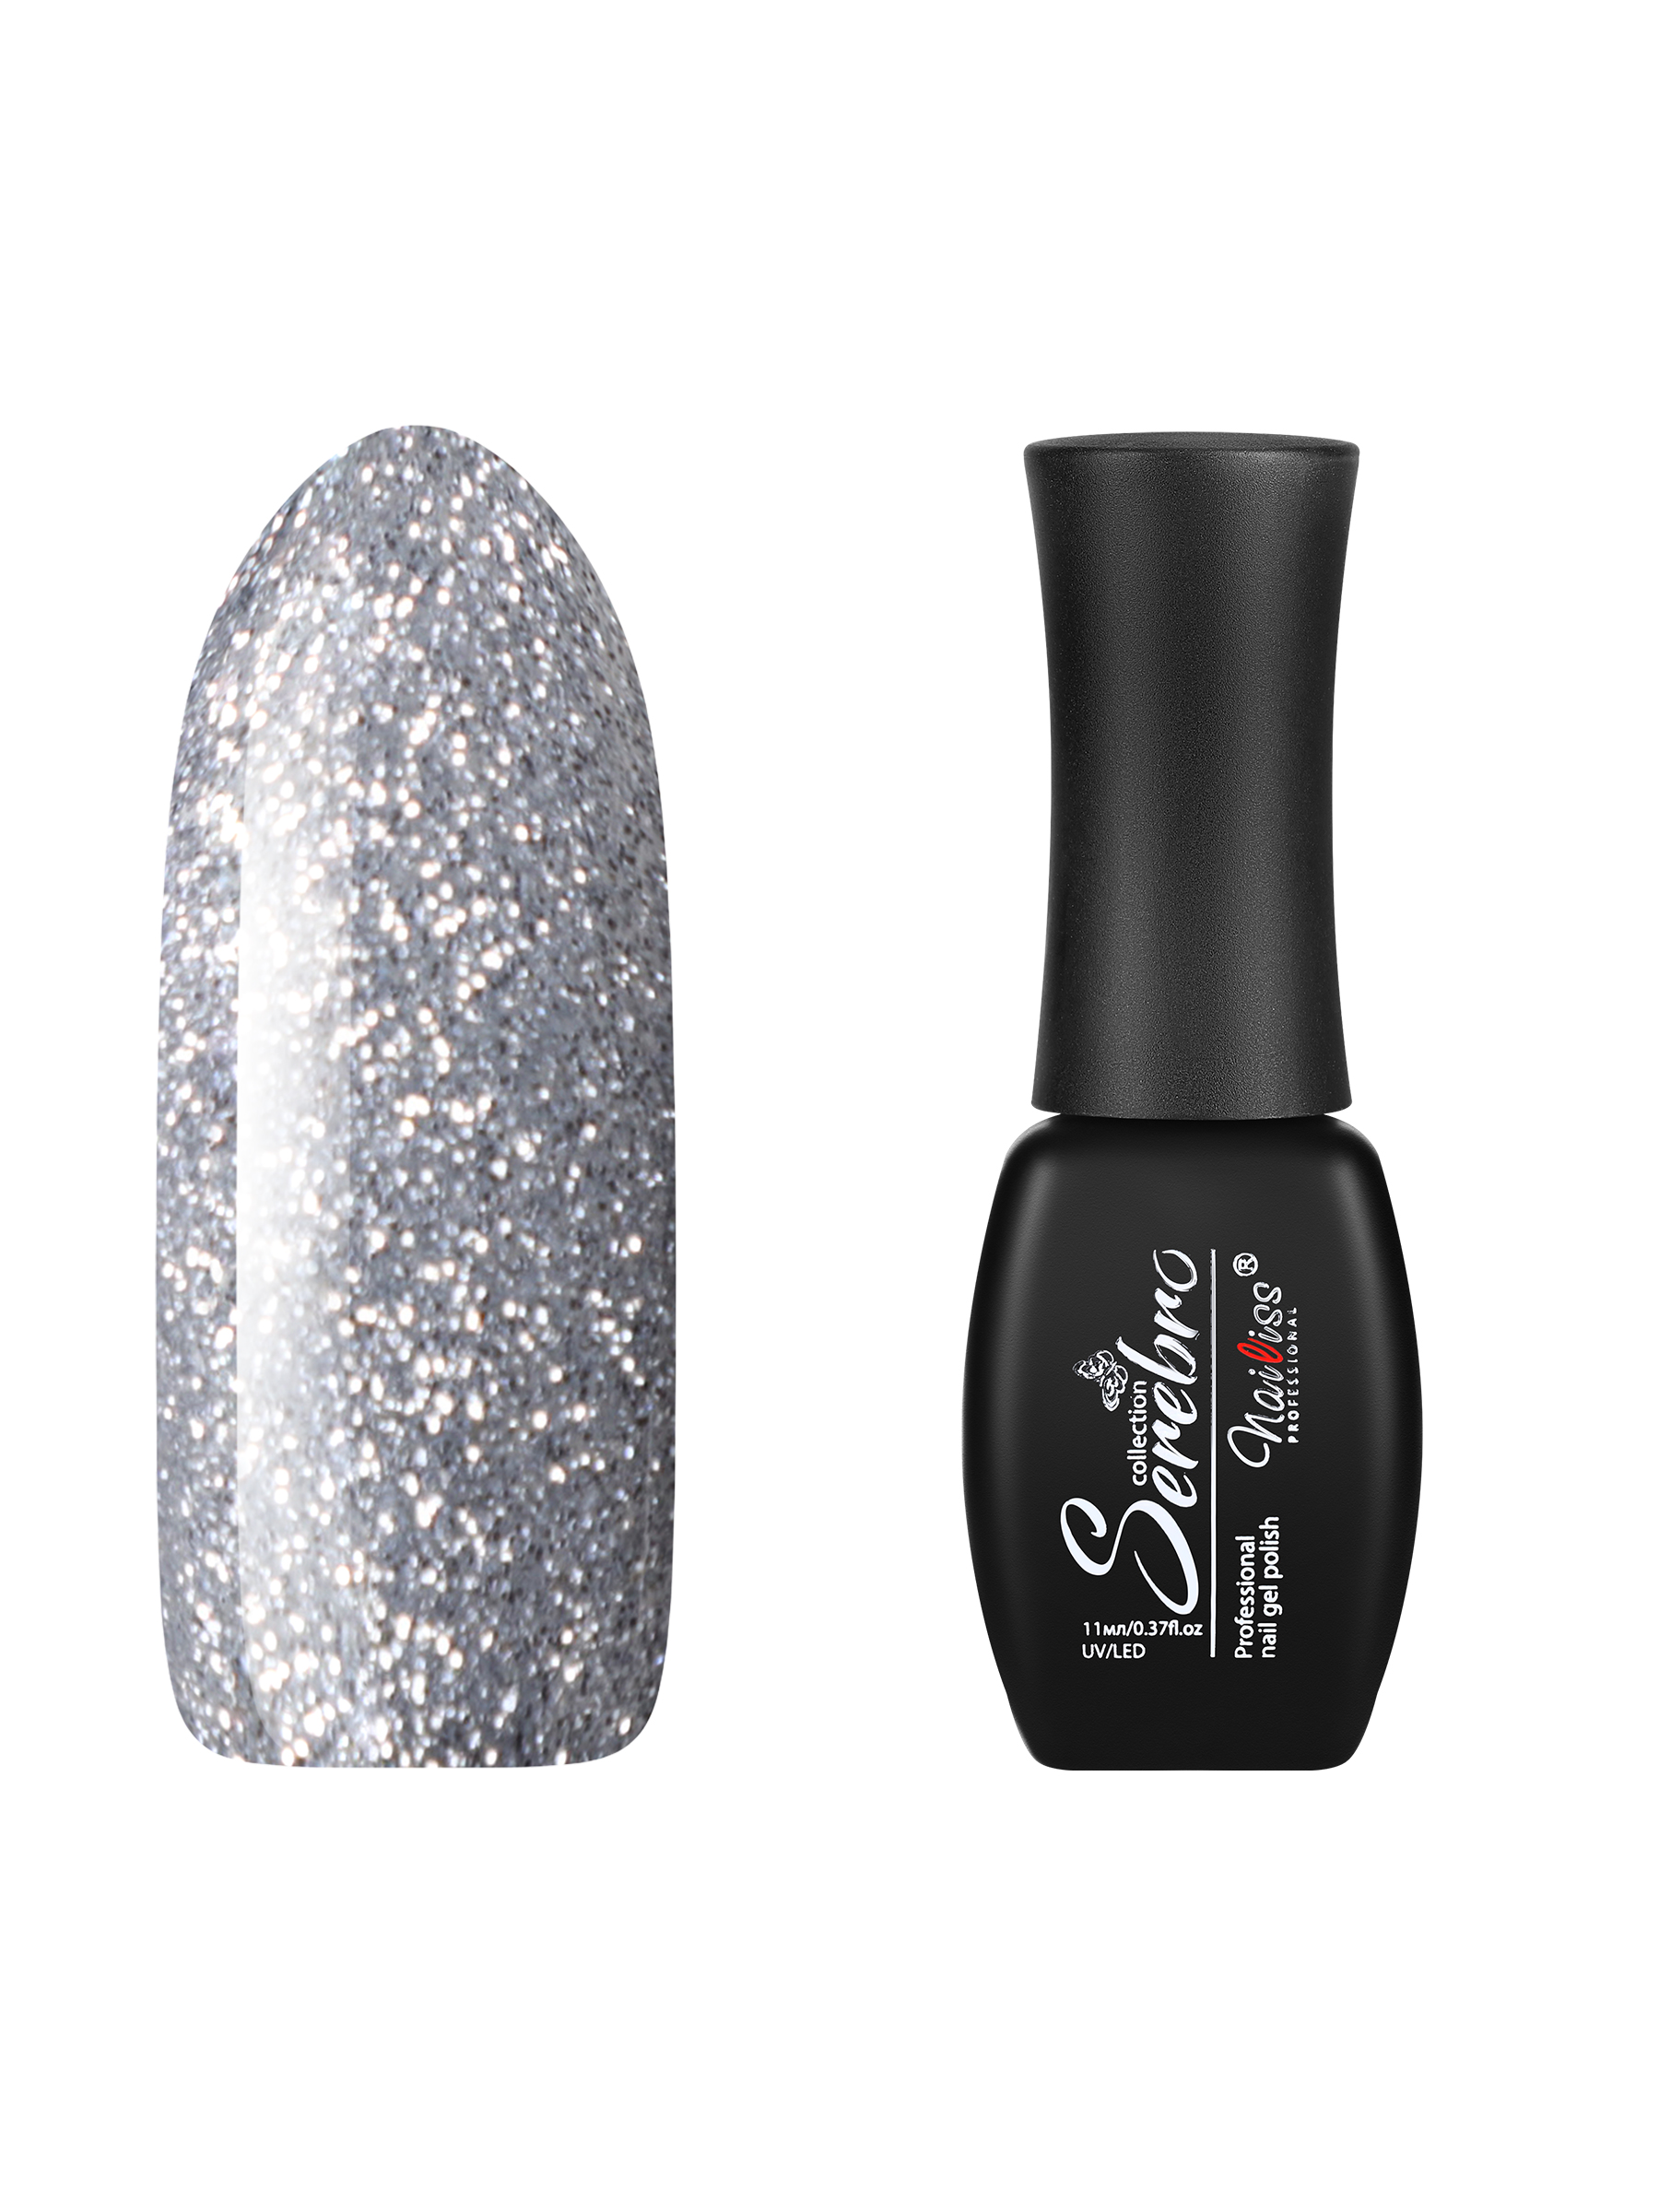 Гель-лак для ногтей Serebro с блестками Glitter Flash светоотражающий, серебро, 11 мл флорариум бутон 2 швы серебро